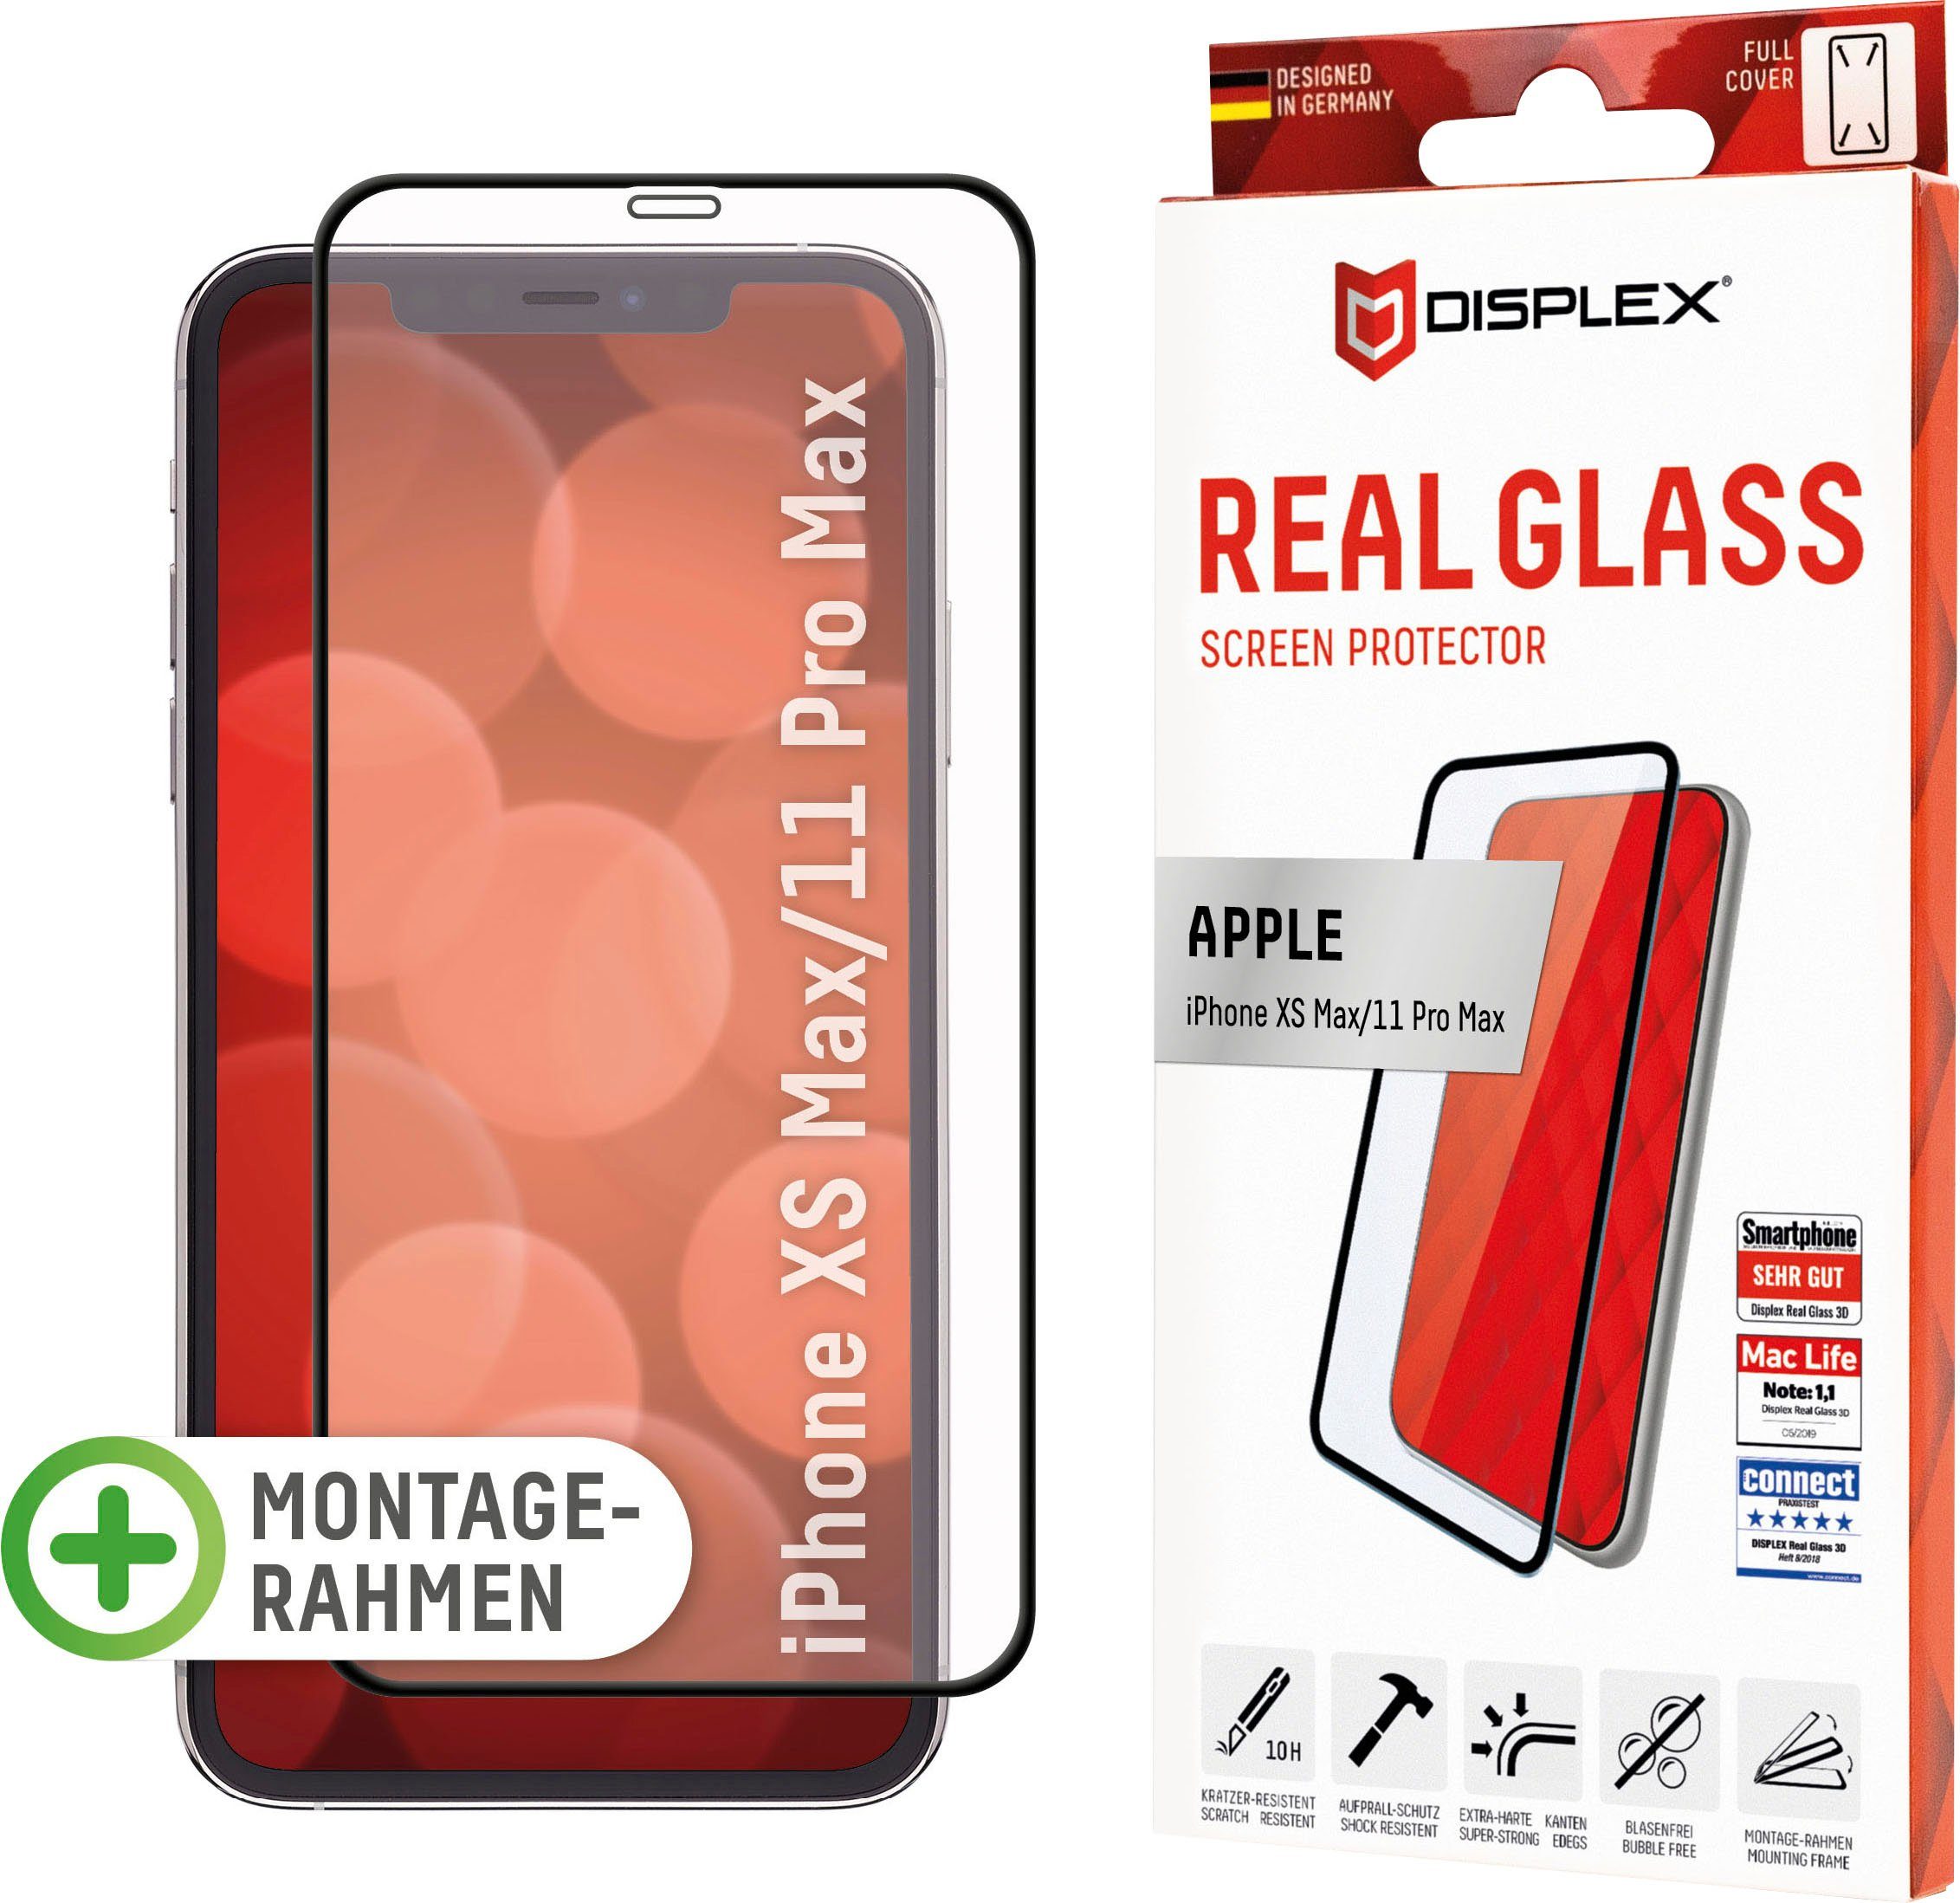 Displex »DISPLEX Real Glass Panzerglas für Apple iPhone XS Max/11 Pro Max  (6,5), 10H Tempered Glass, mit Montagerahmen, Full Cover« für Apple iPhone  11 Pro Max, XS Max, Displayschutzglas online kaufen | OTTO